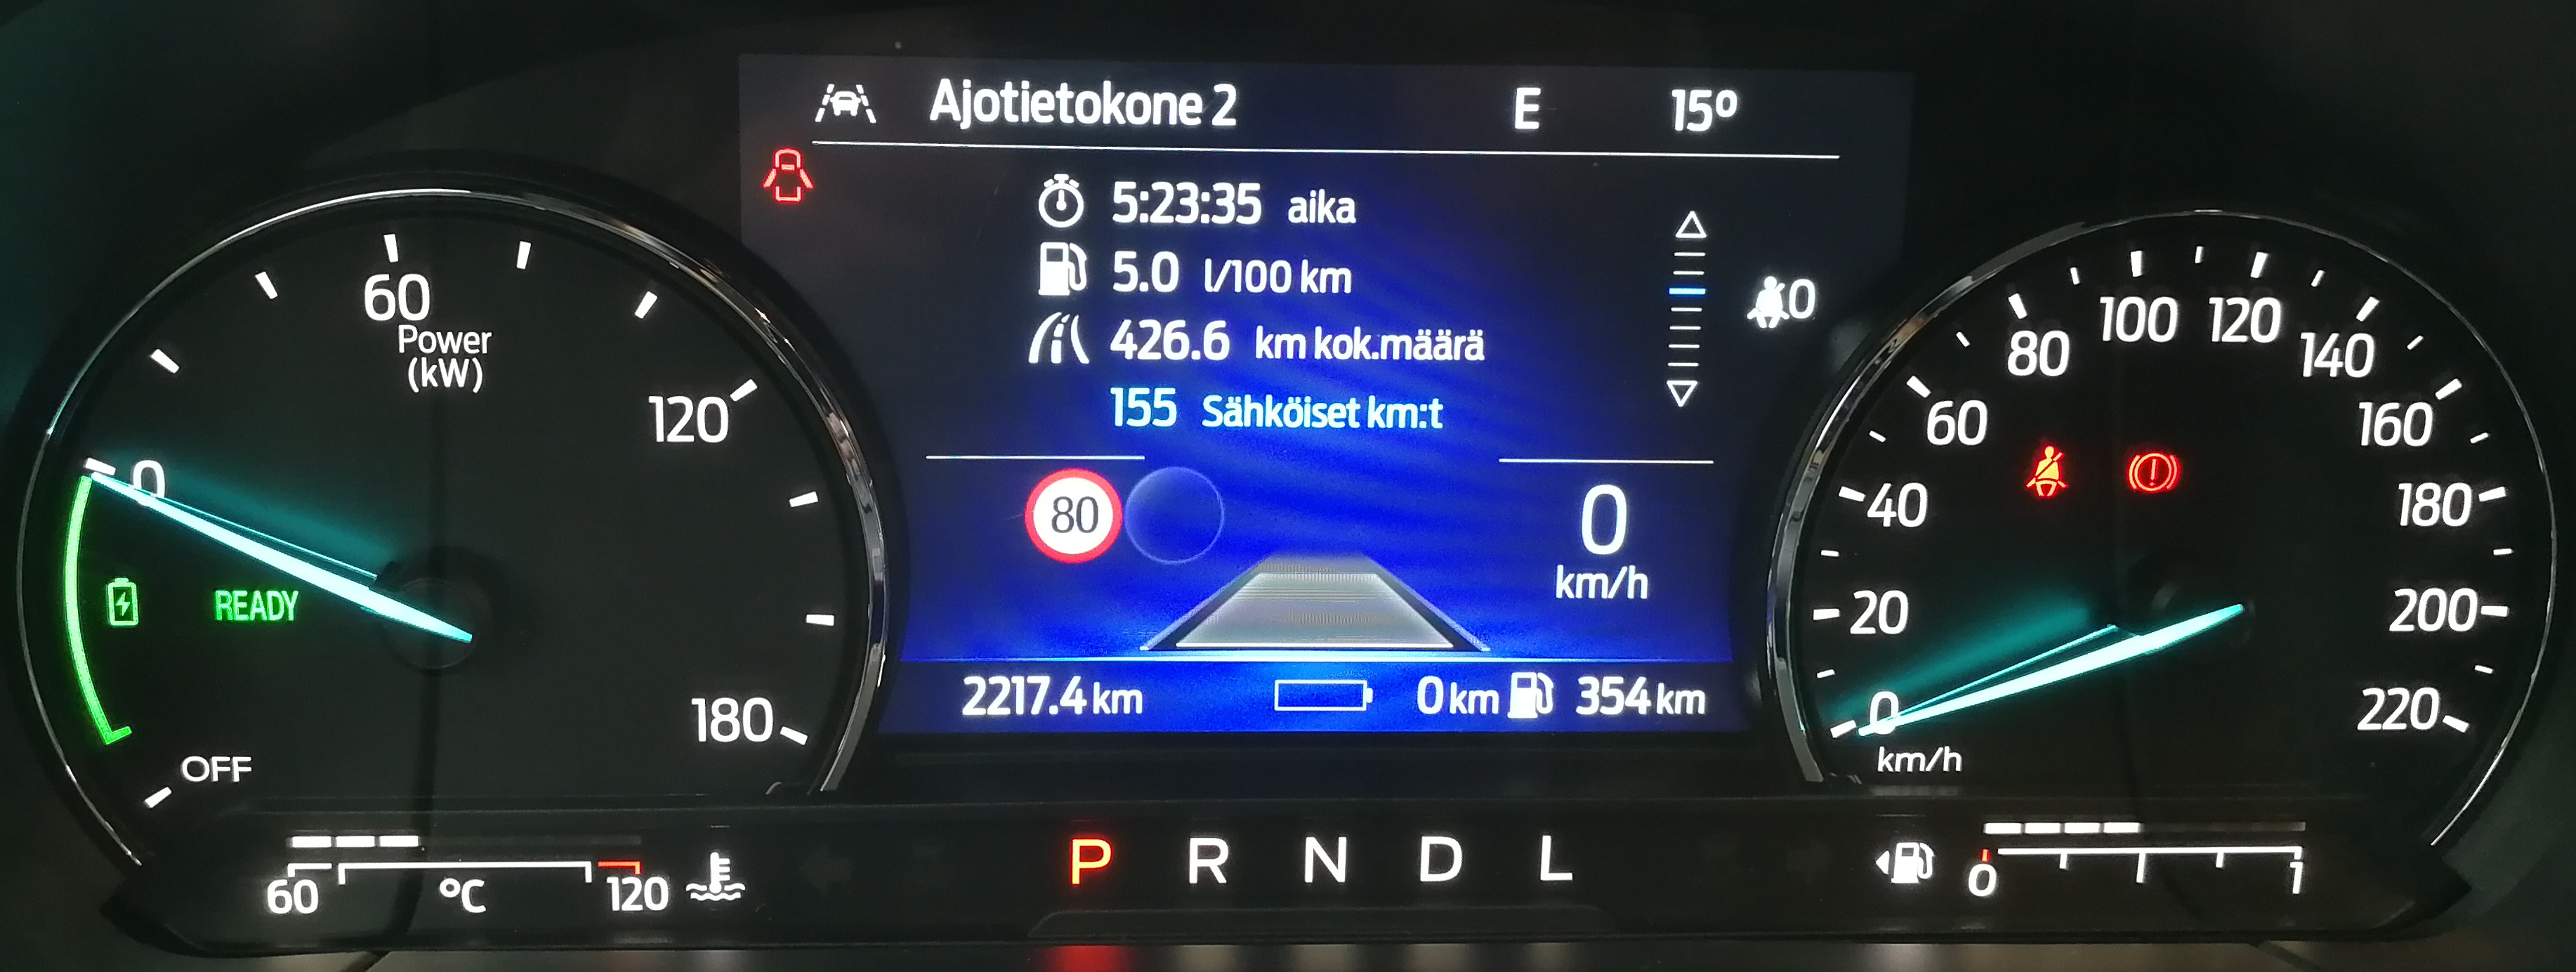 Ford Kuga PHEV verbraucht 5 l / 100 km für 427 km Fahrt